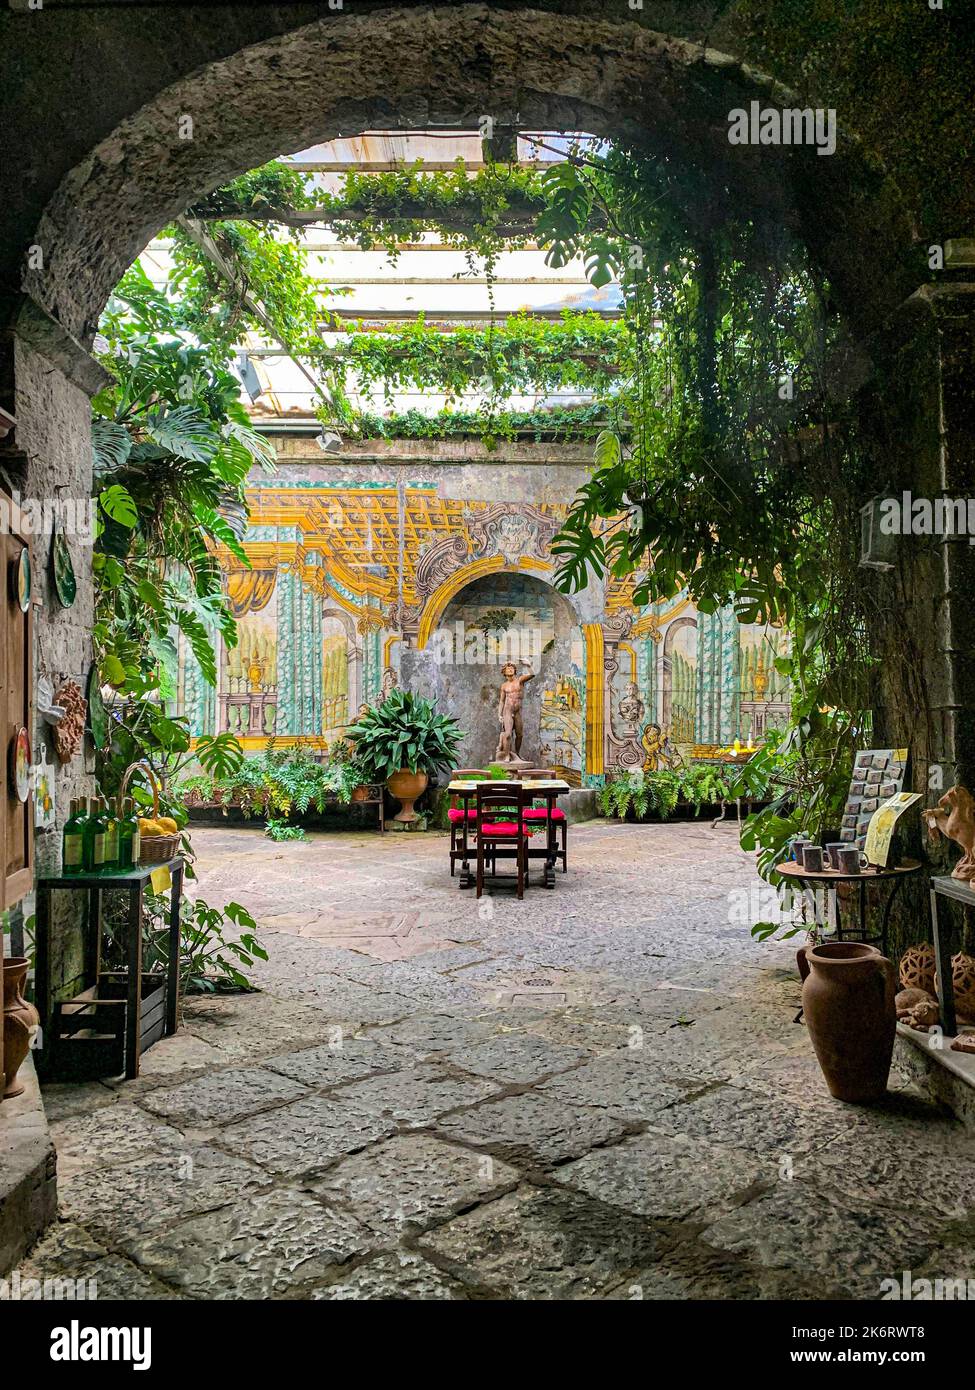 Inner courtyard in an Italian city Stock Photo